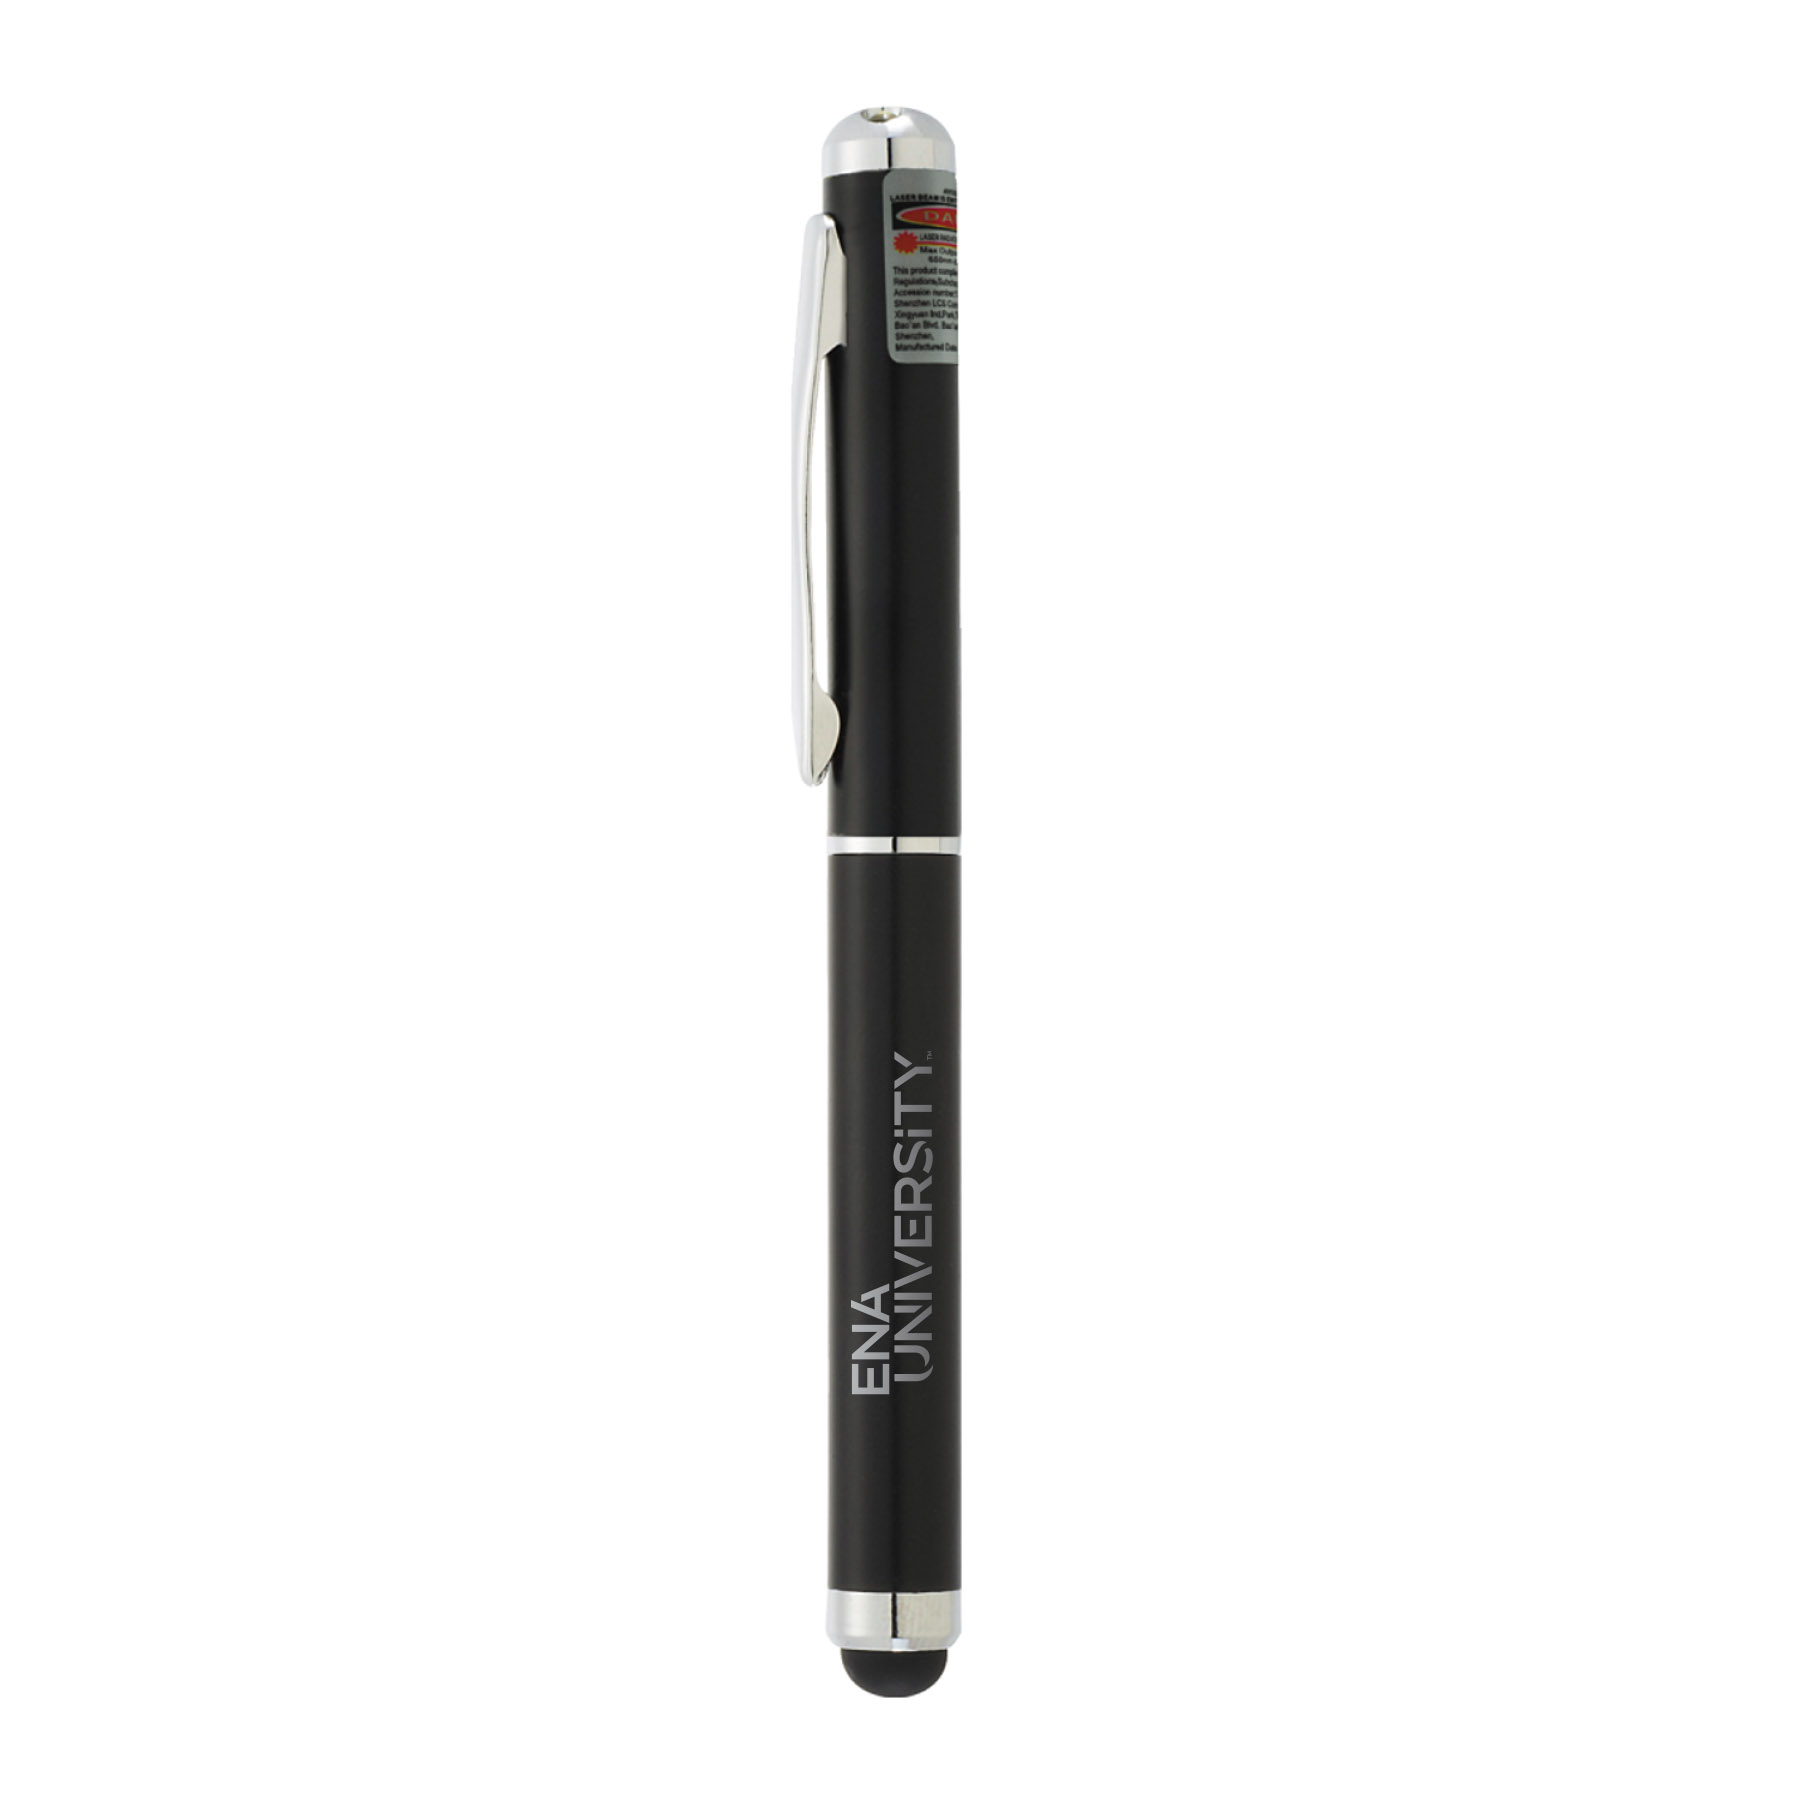 ENA University Black 4 in 1 Light and Laser Pen